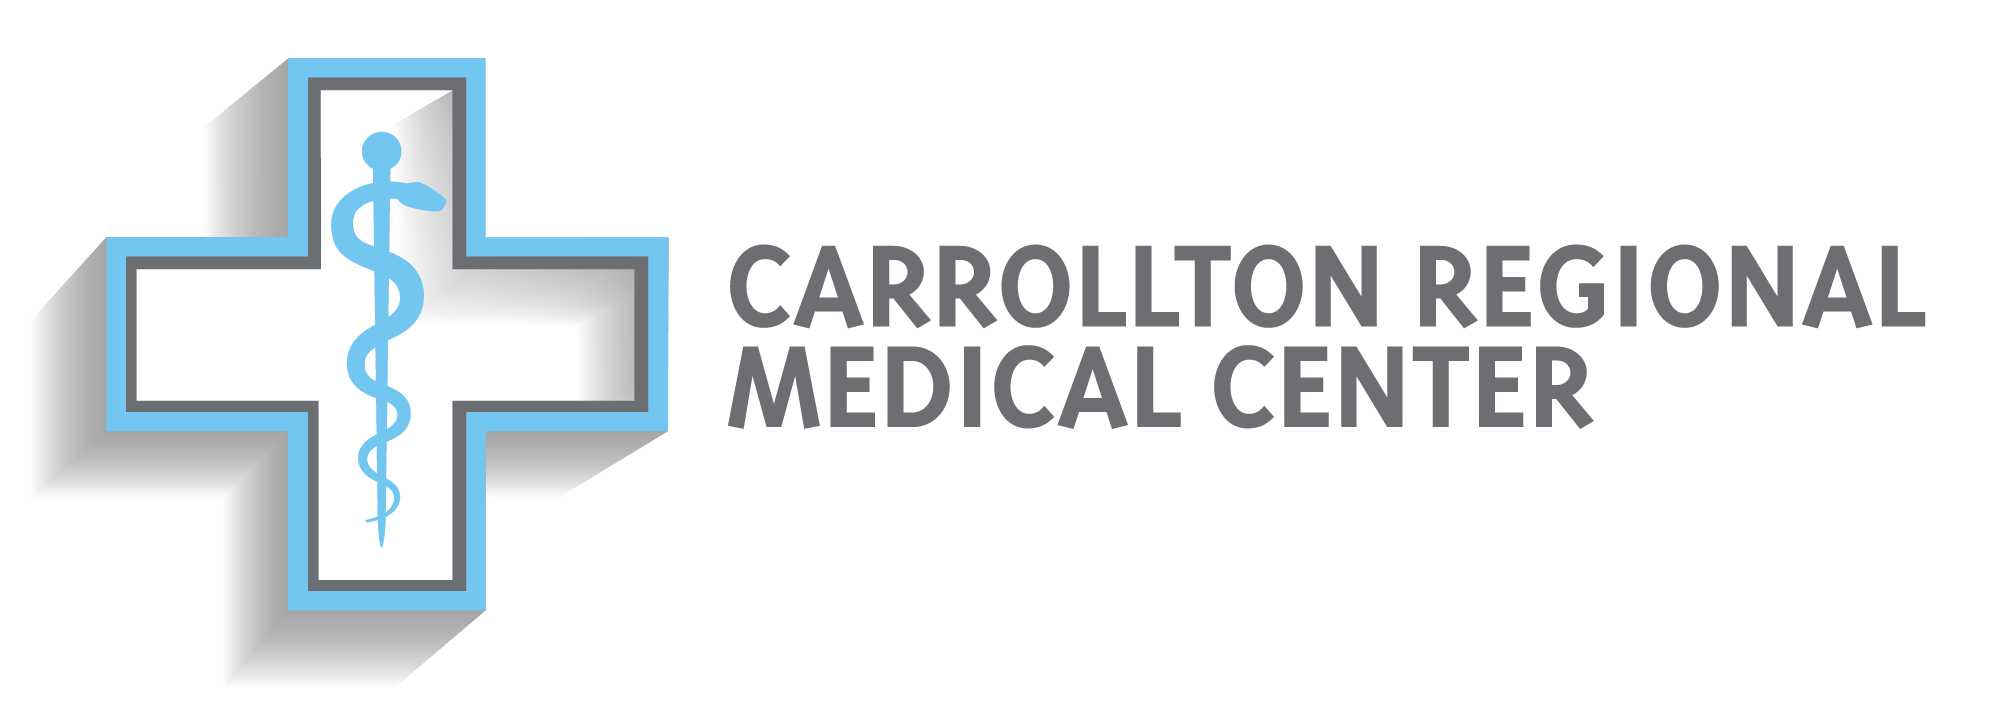 Carrollton Regional Medical Center Best Hospital In Carroll - Texas - Dallas ID1538222